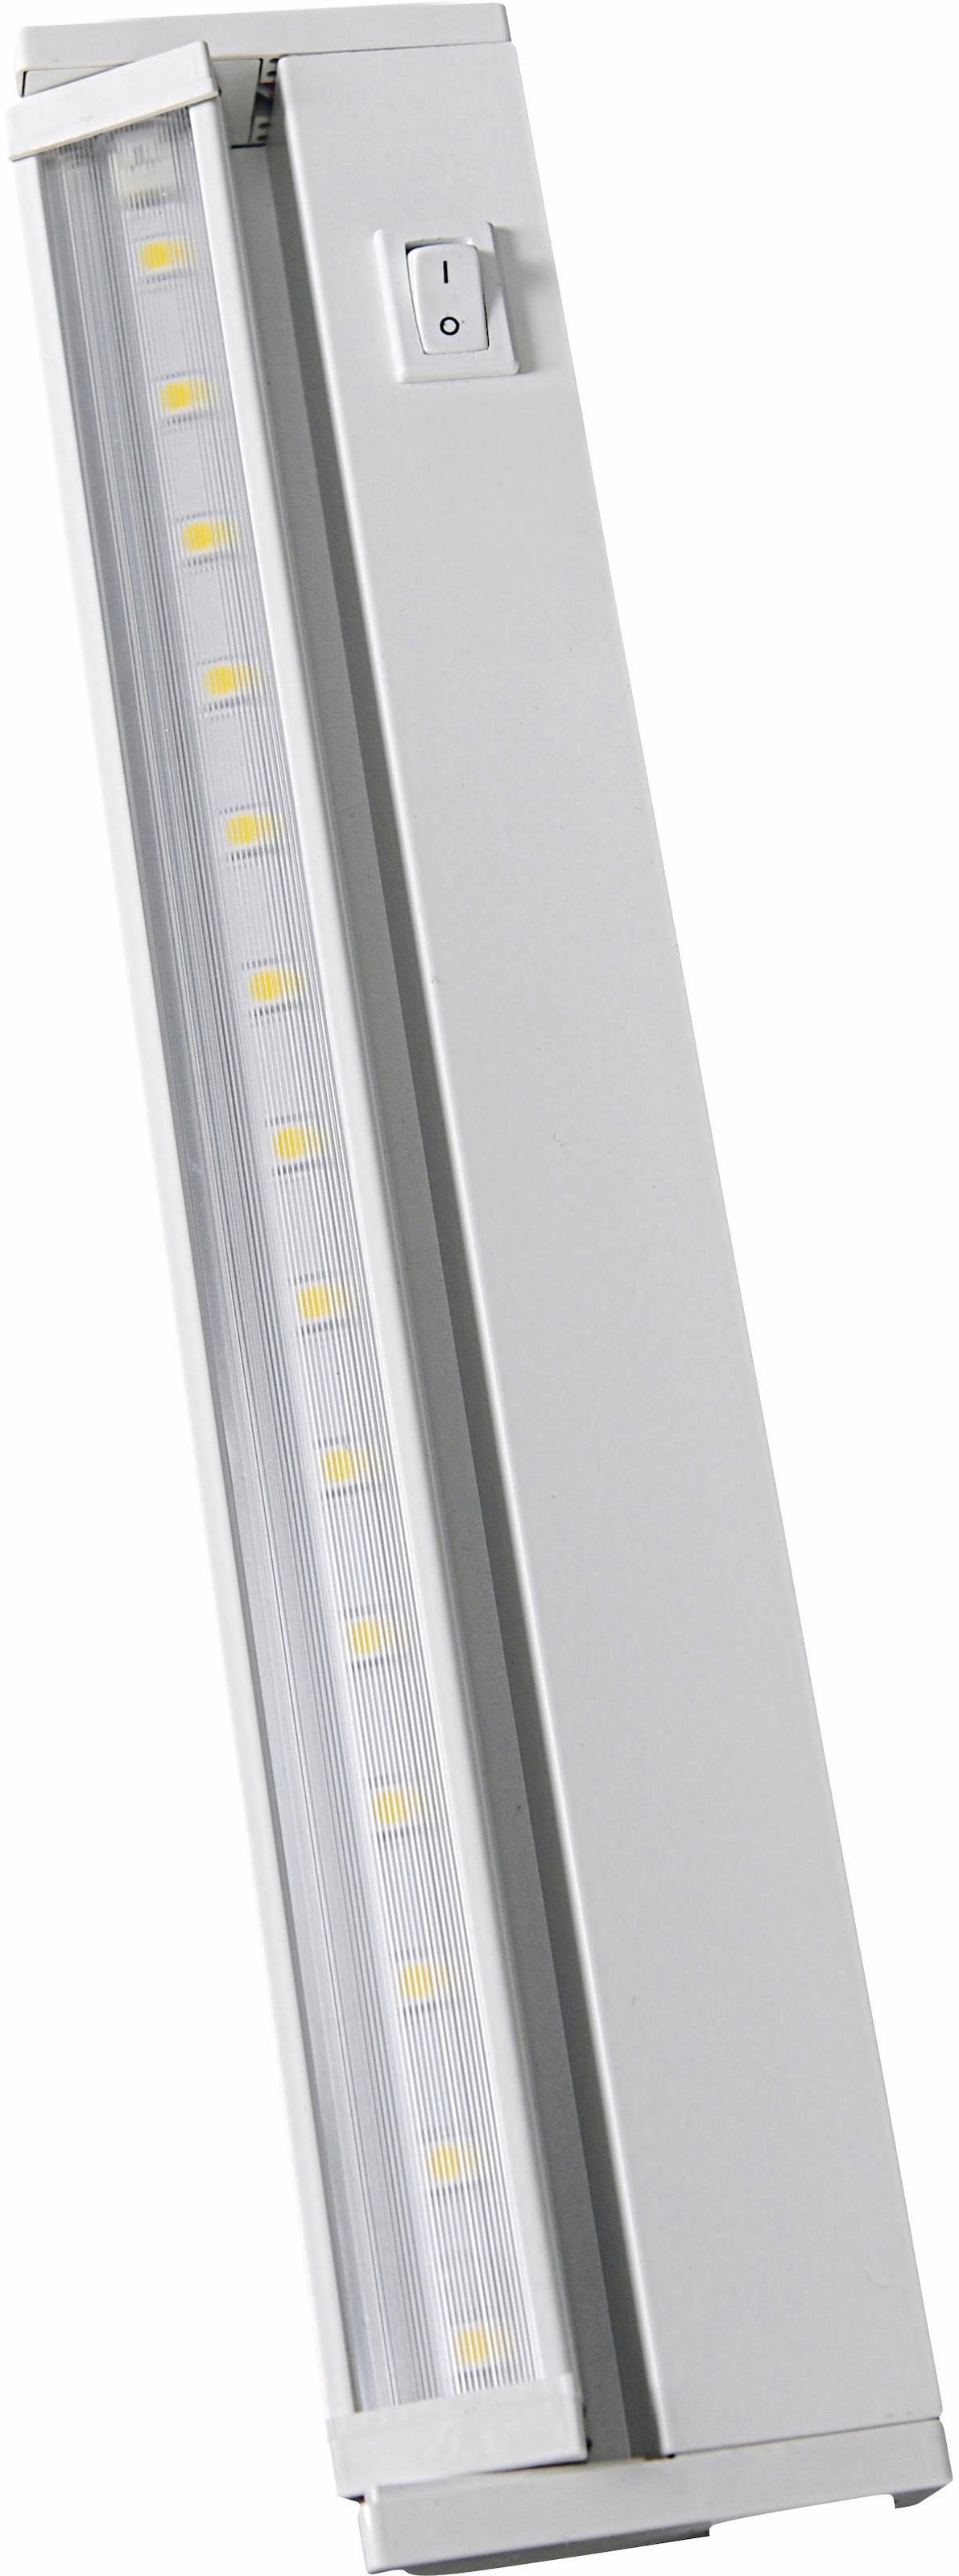 näve Lichtleiste »FUNCTION«, 1 flammig, Leuchtmittel LED-Board | LED fest integriert, Möbelunterbauleuchte, 14 LED 5050SMD total 3W